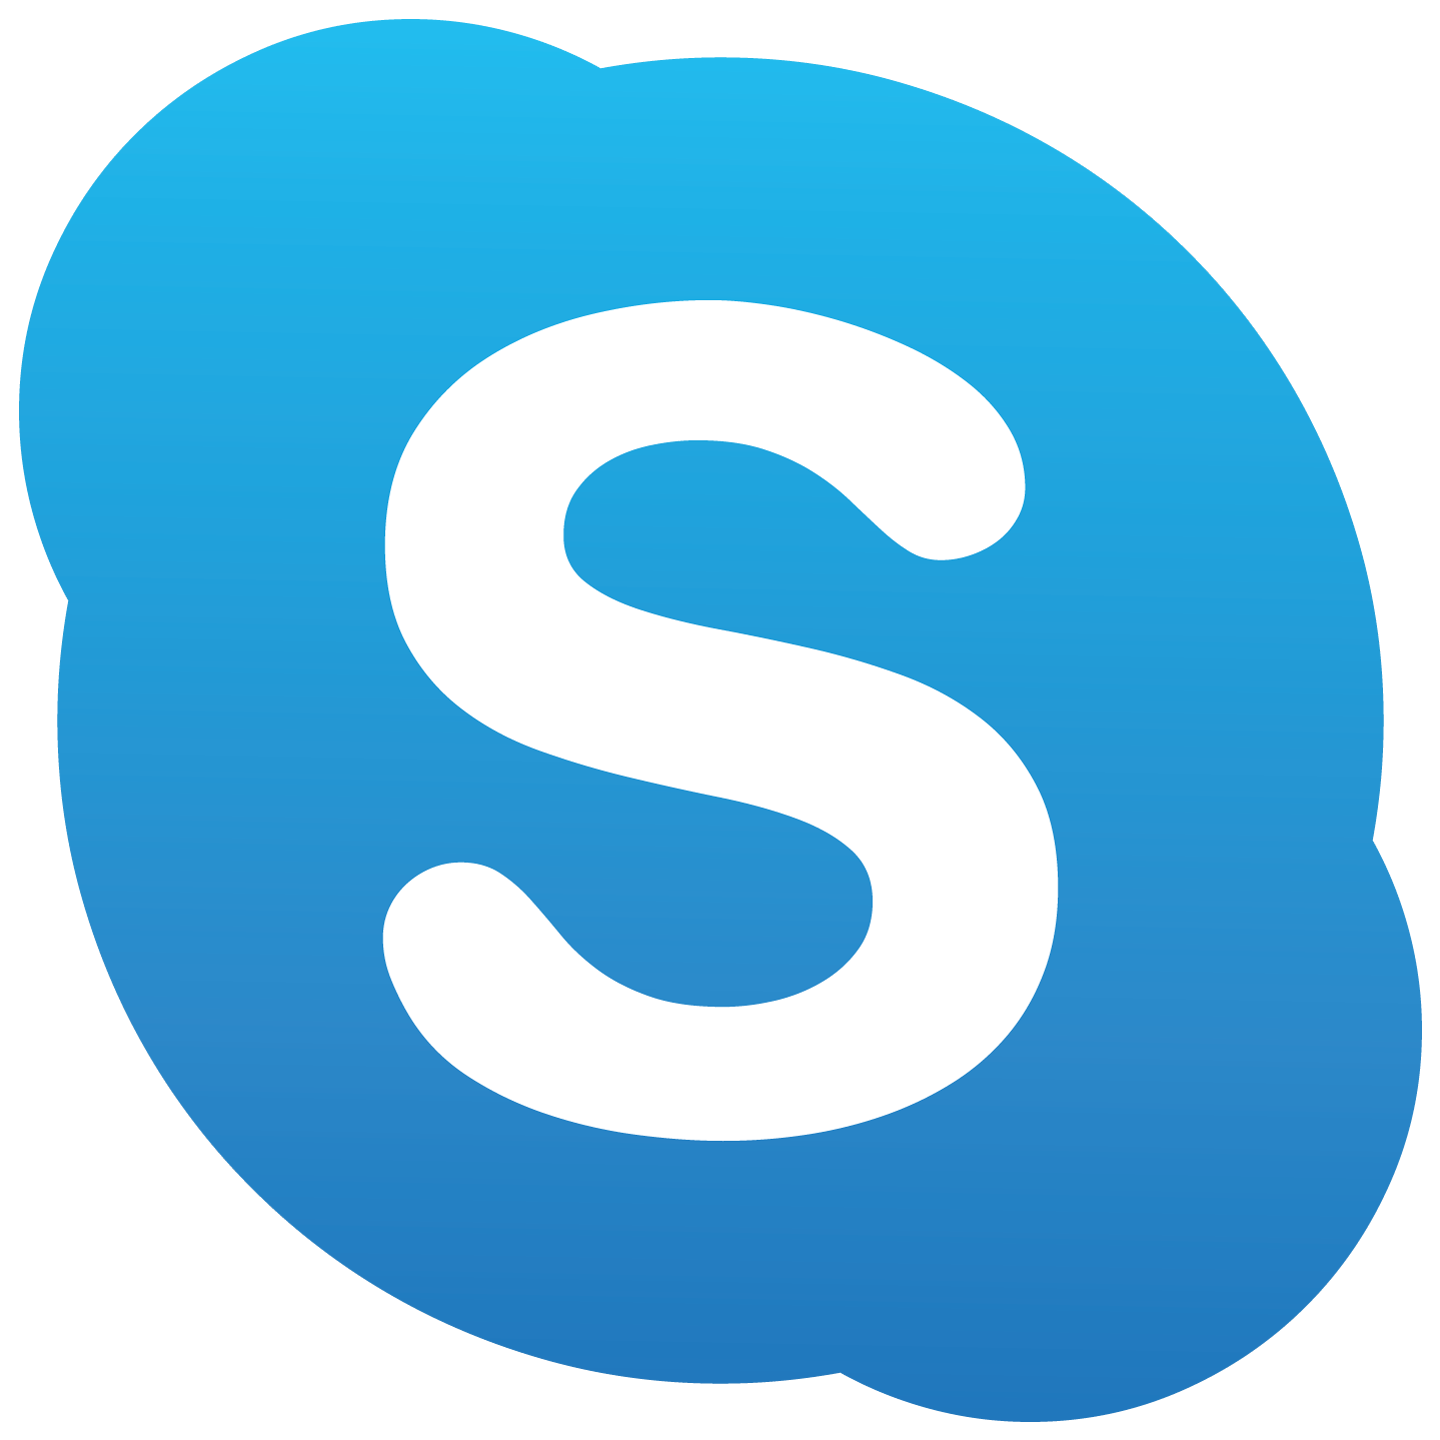 Skype Logo.